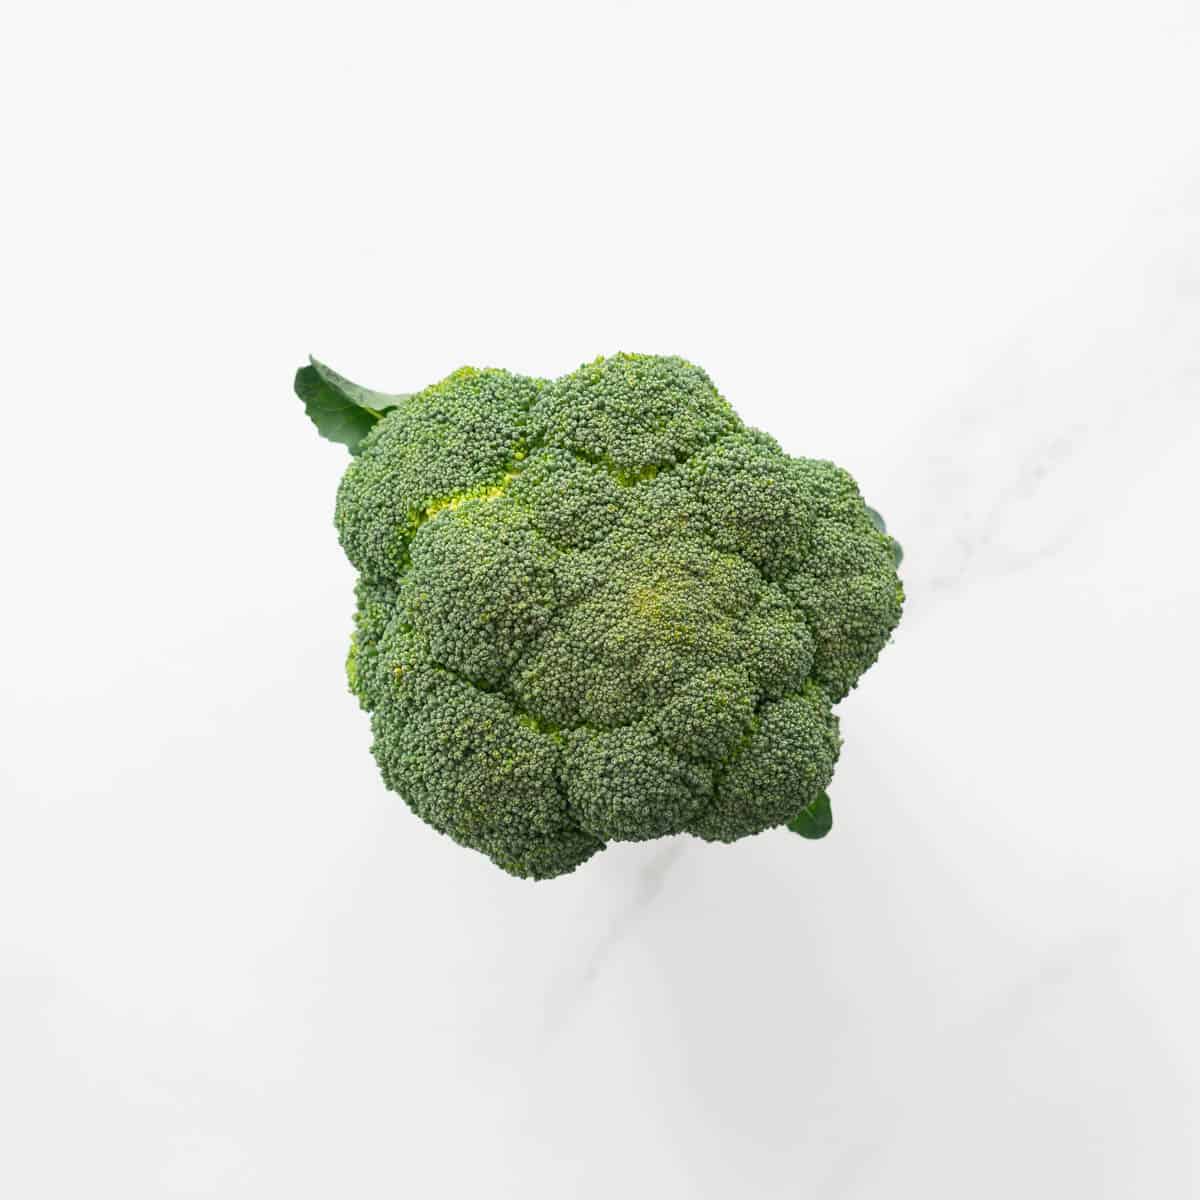 A head of broccoli.